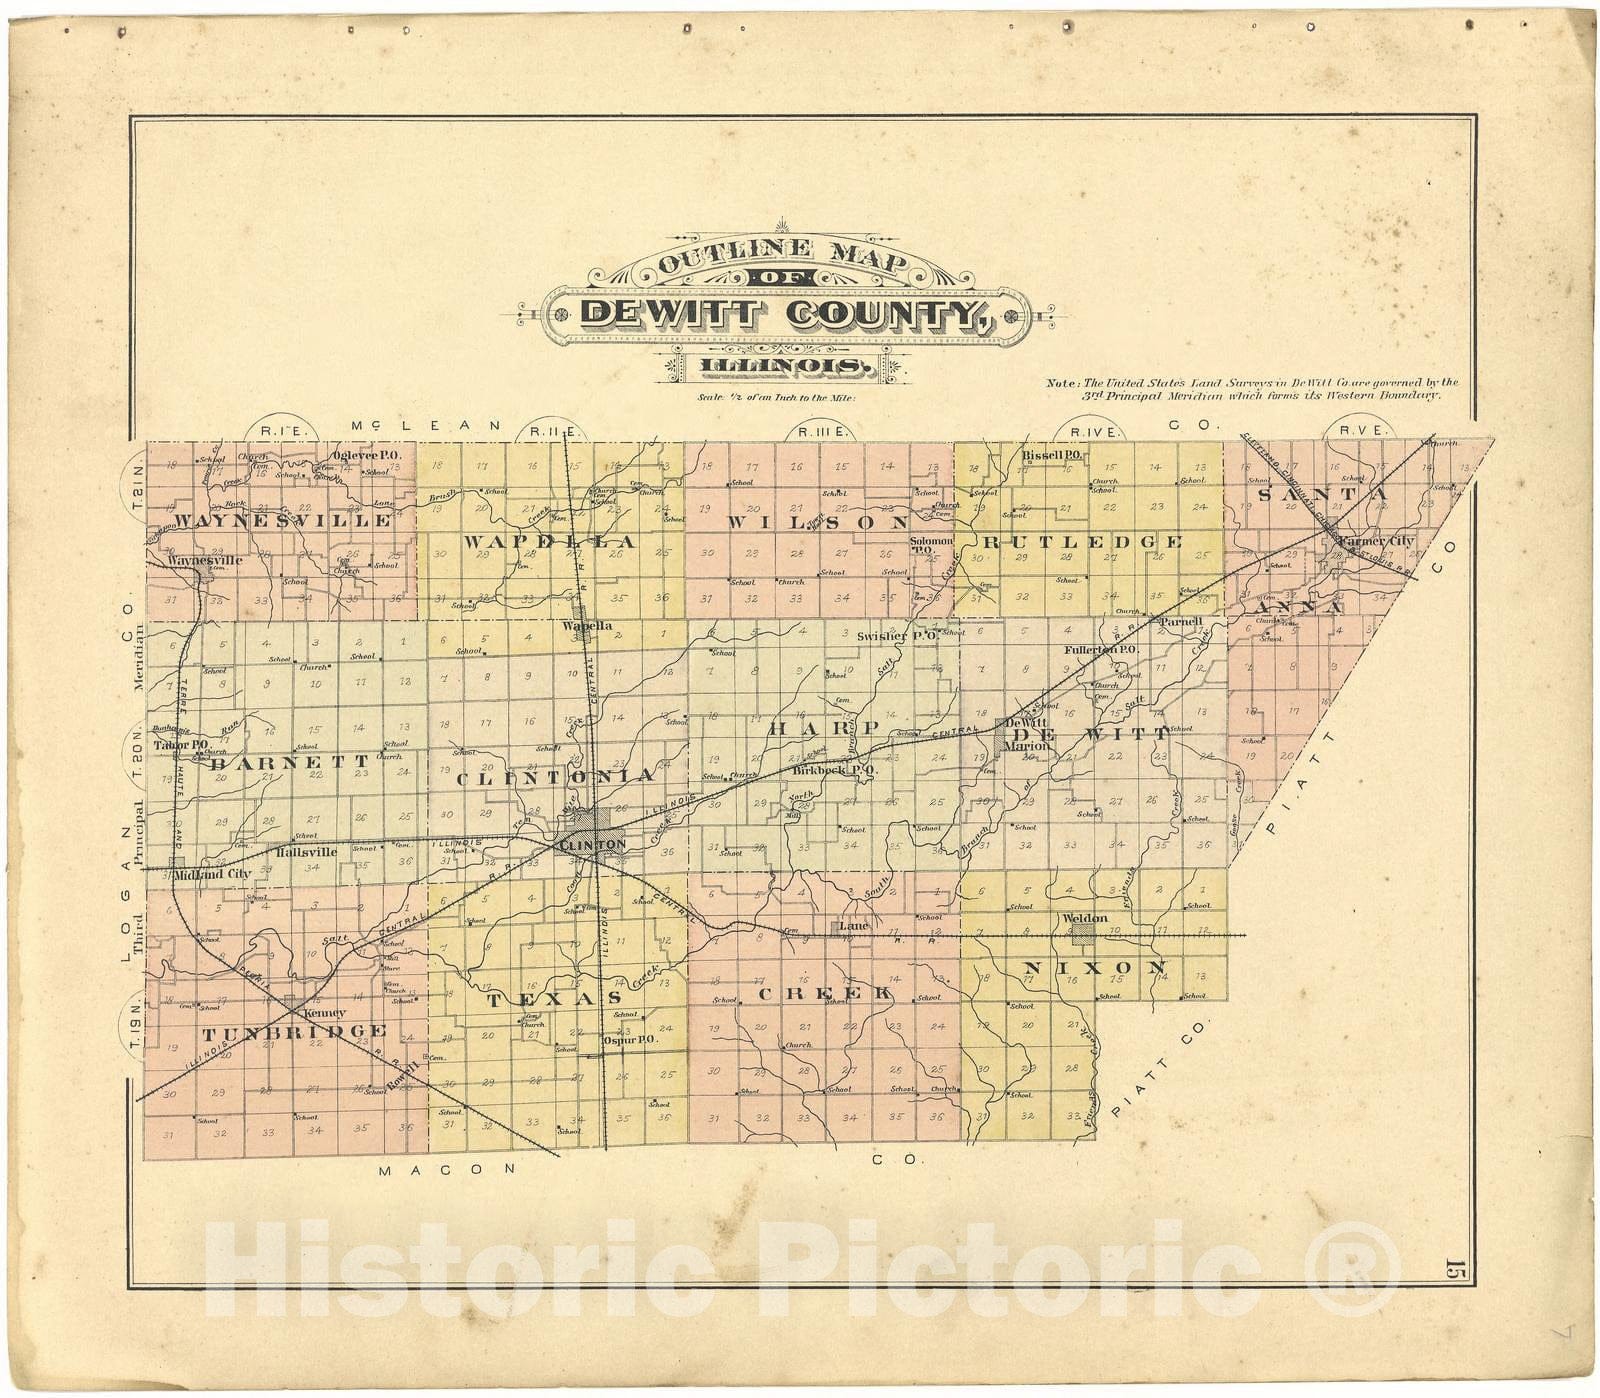 Historic 1894 Map - Plat Book of De WITT County, Illinois - Outline Map of Dewitt County, Illinois